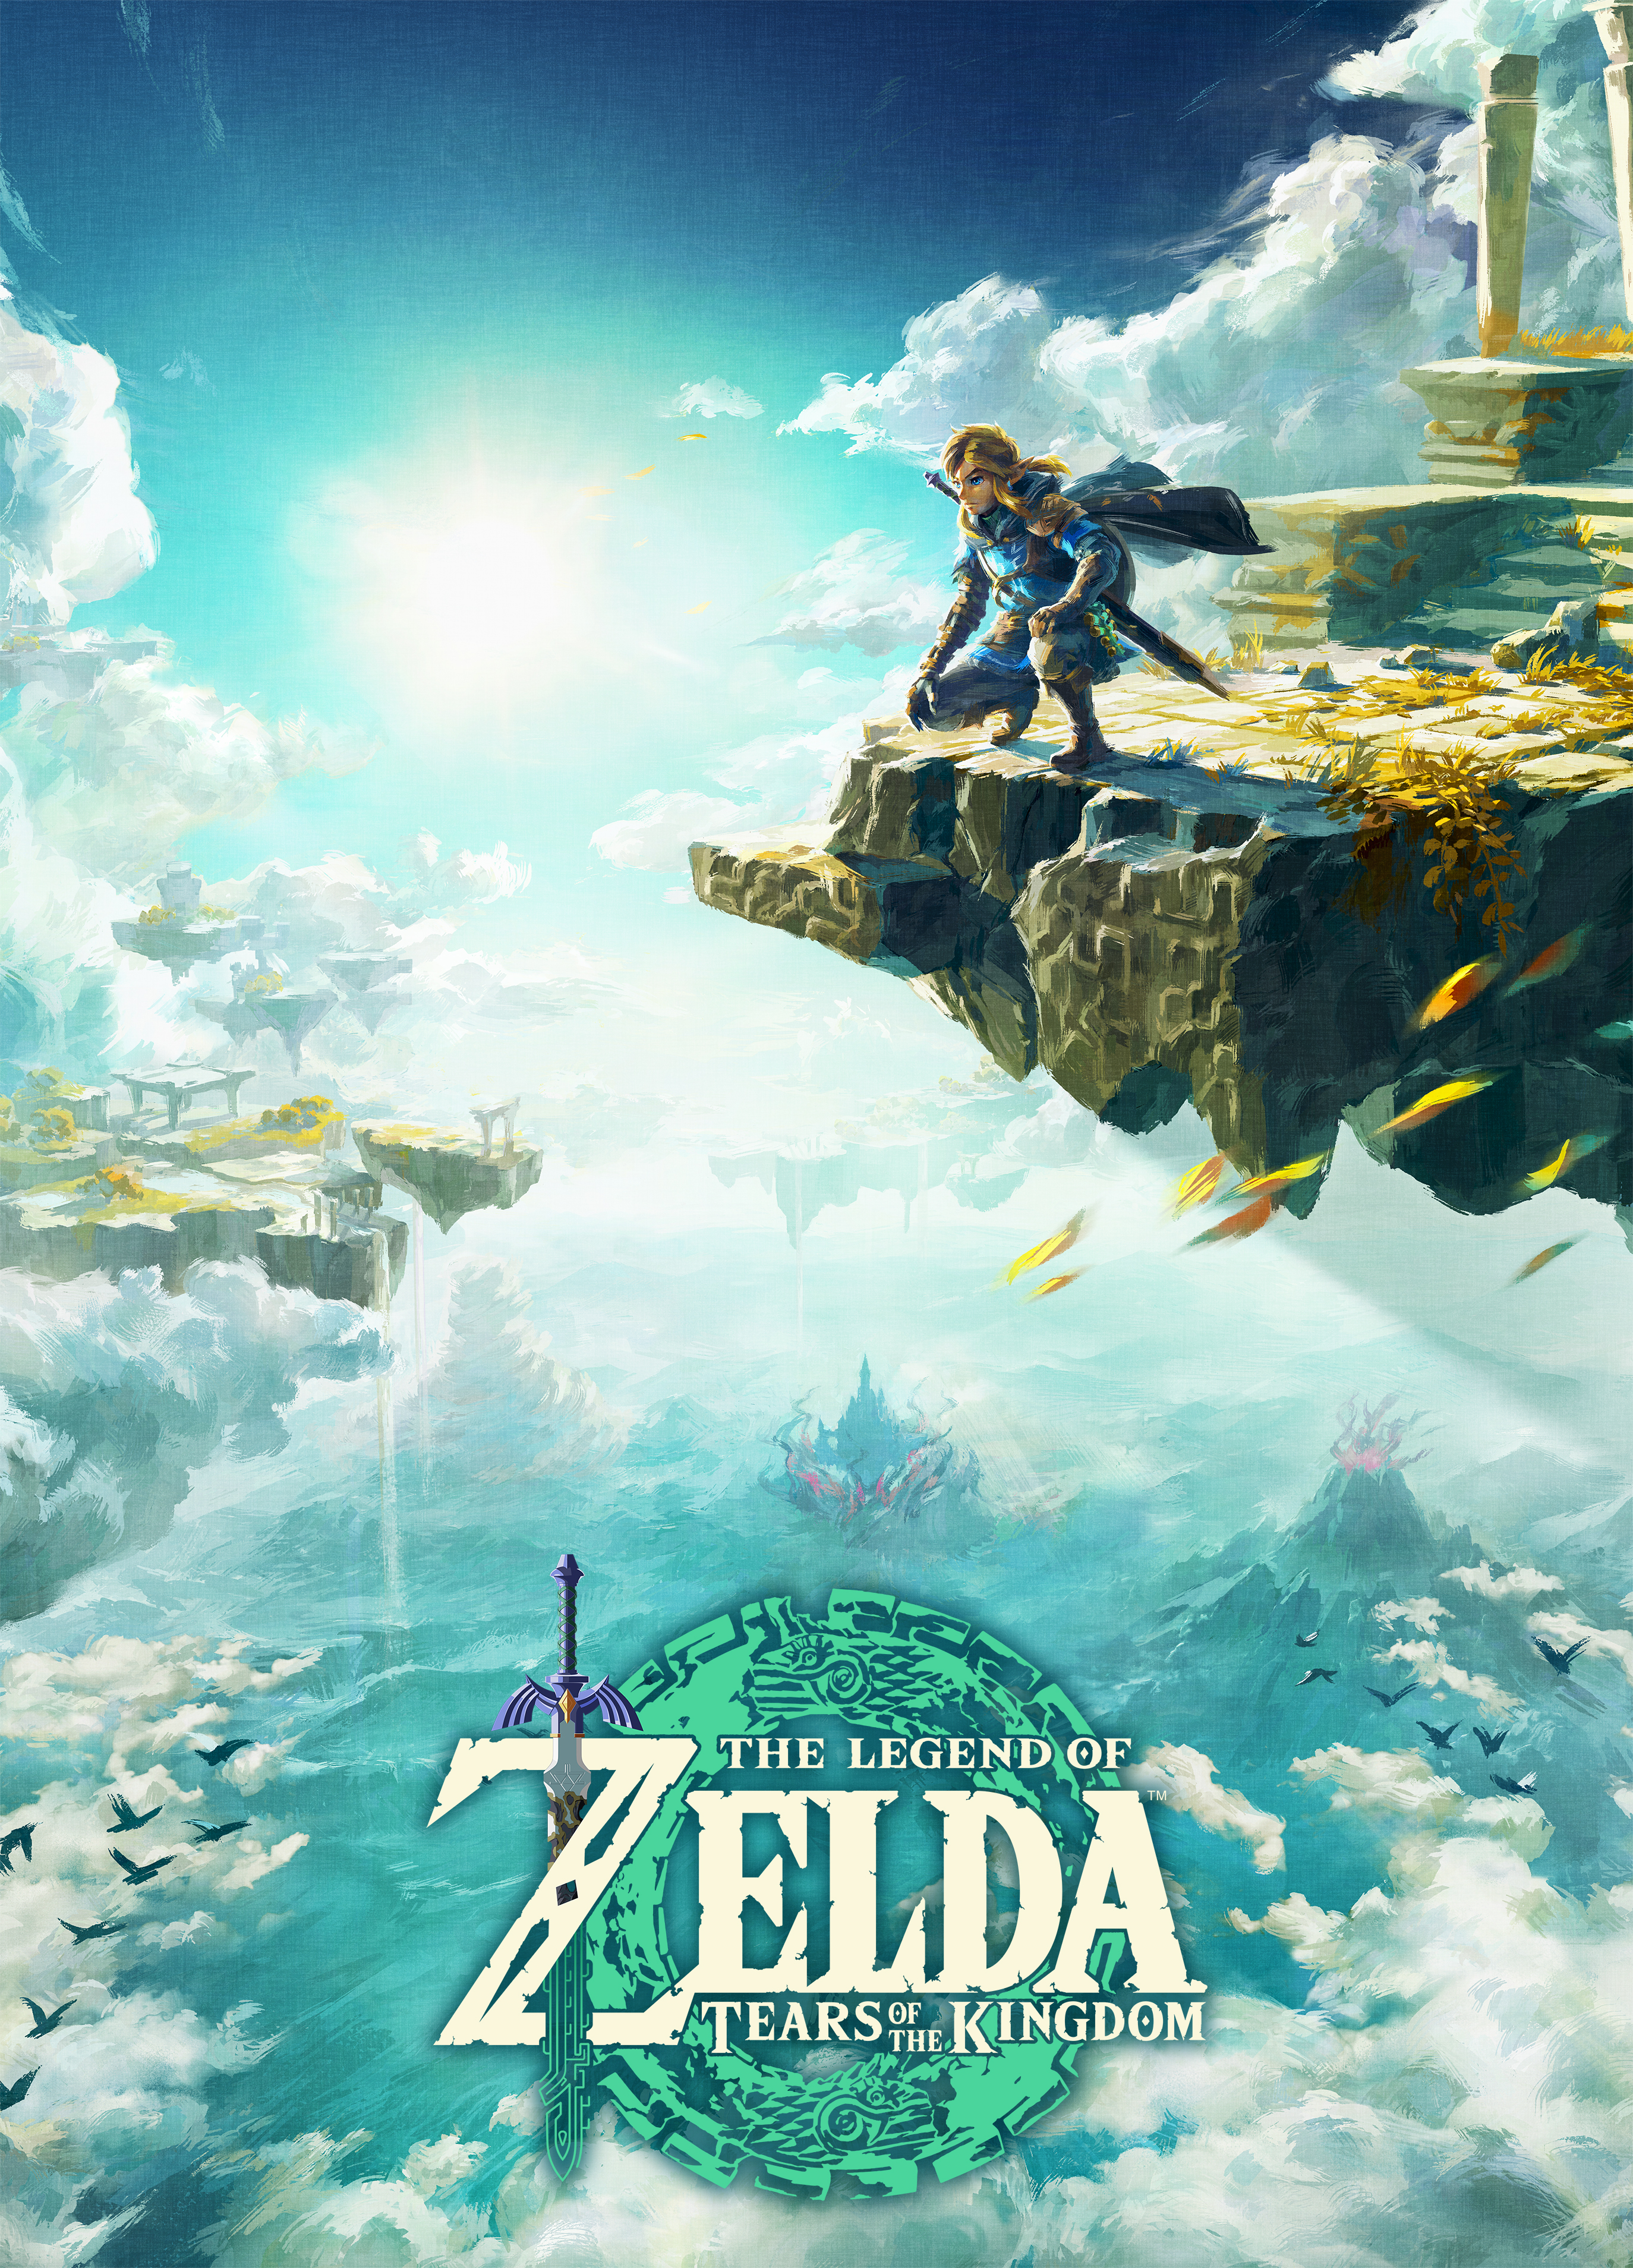 The Legend of Zelda: Breath of the Wild sequel The Legend of Zelda: Tears of the Kingdom launches May 2023